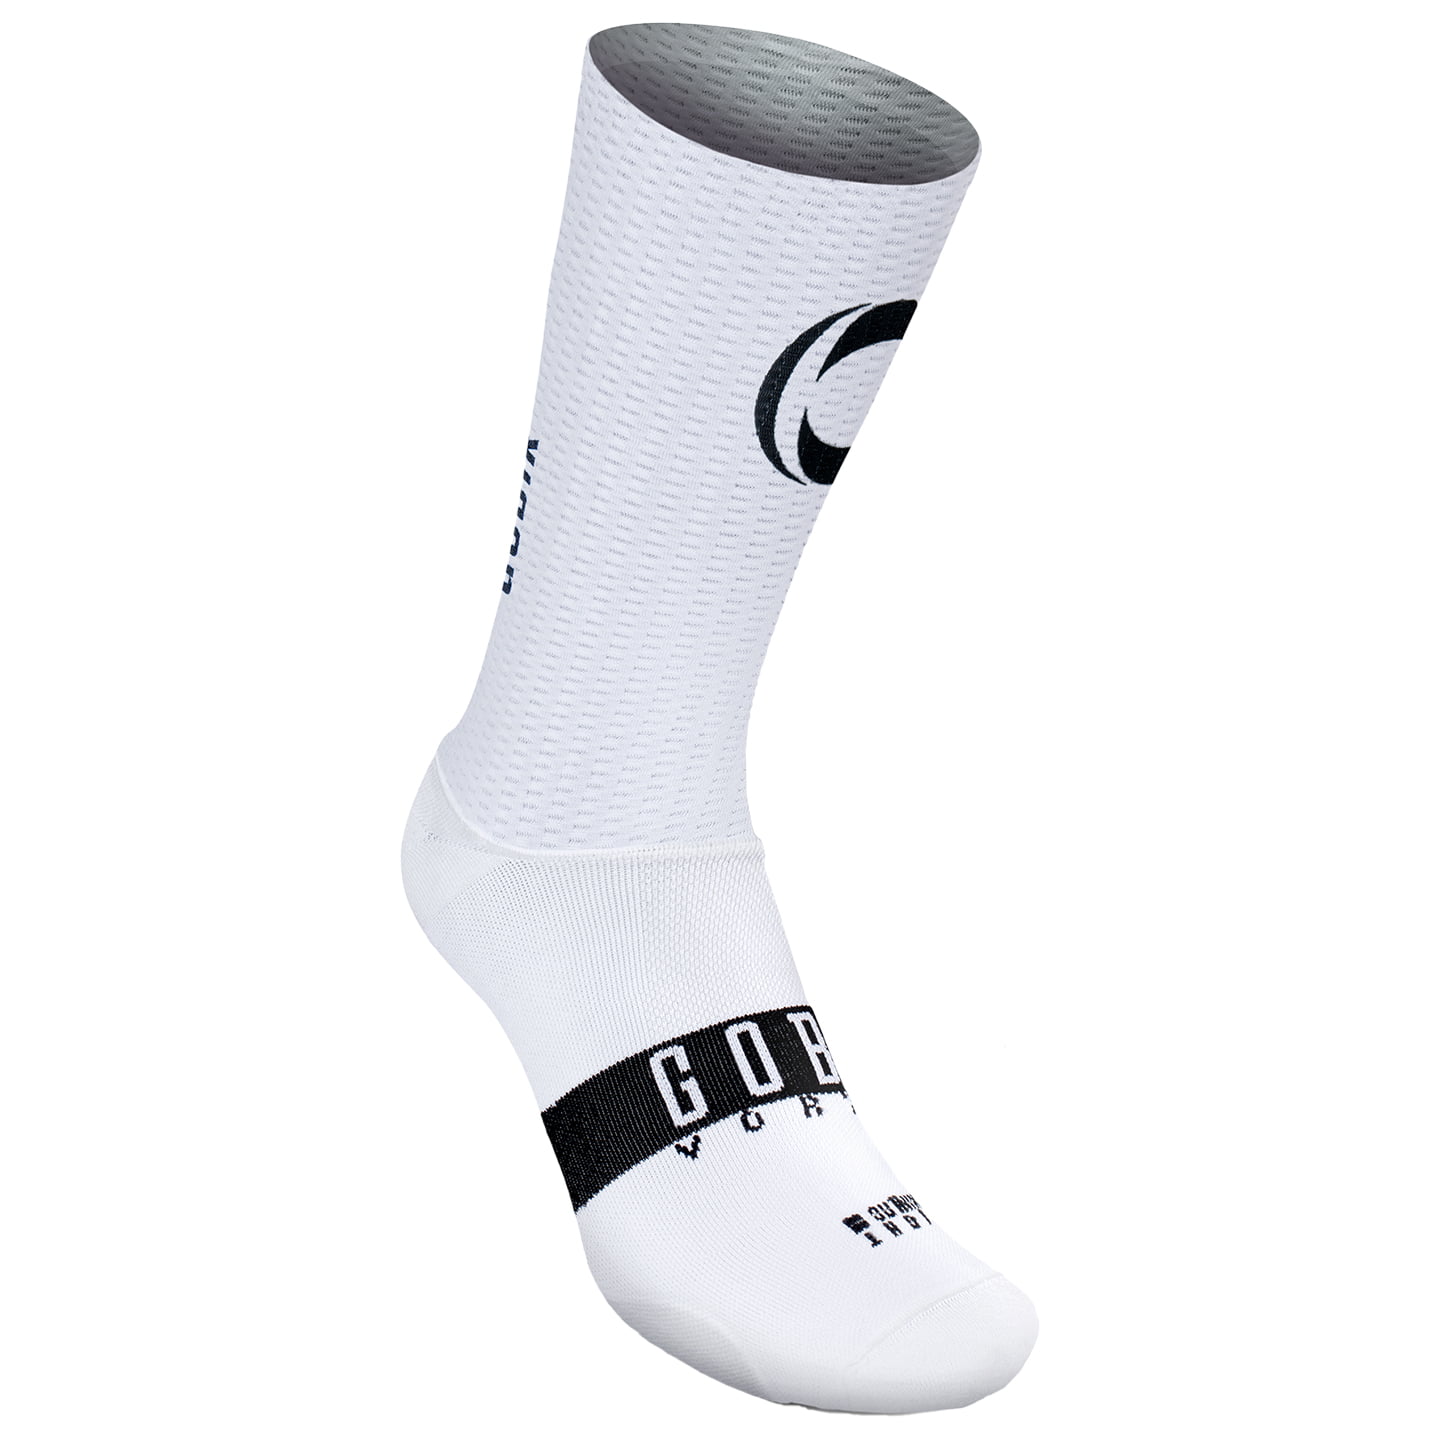 INEOS GRENADIERS Race 2024 Cycling Socks, for men, size S-M, MTB socks, Cycling clothing